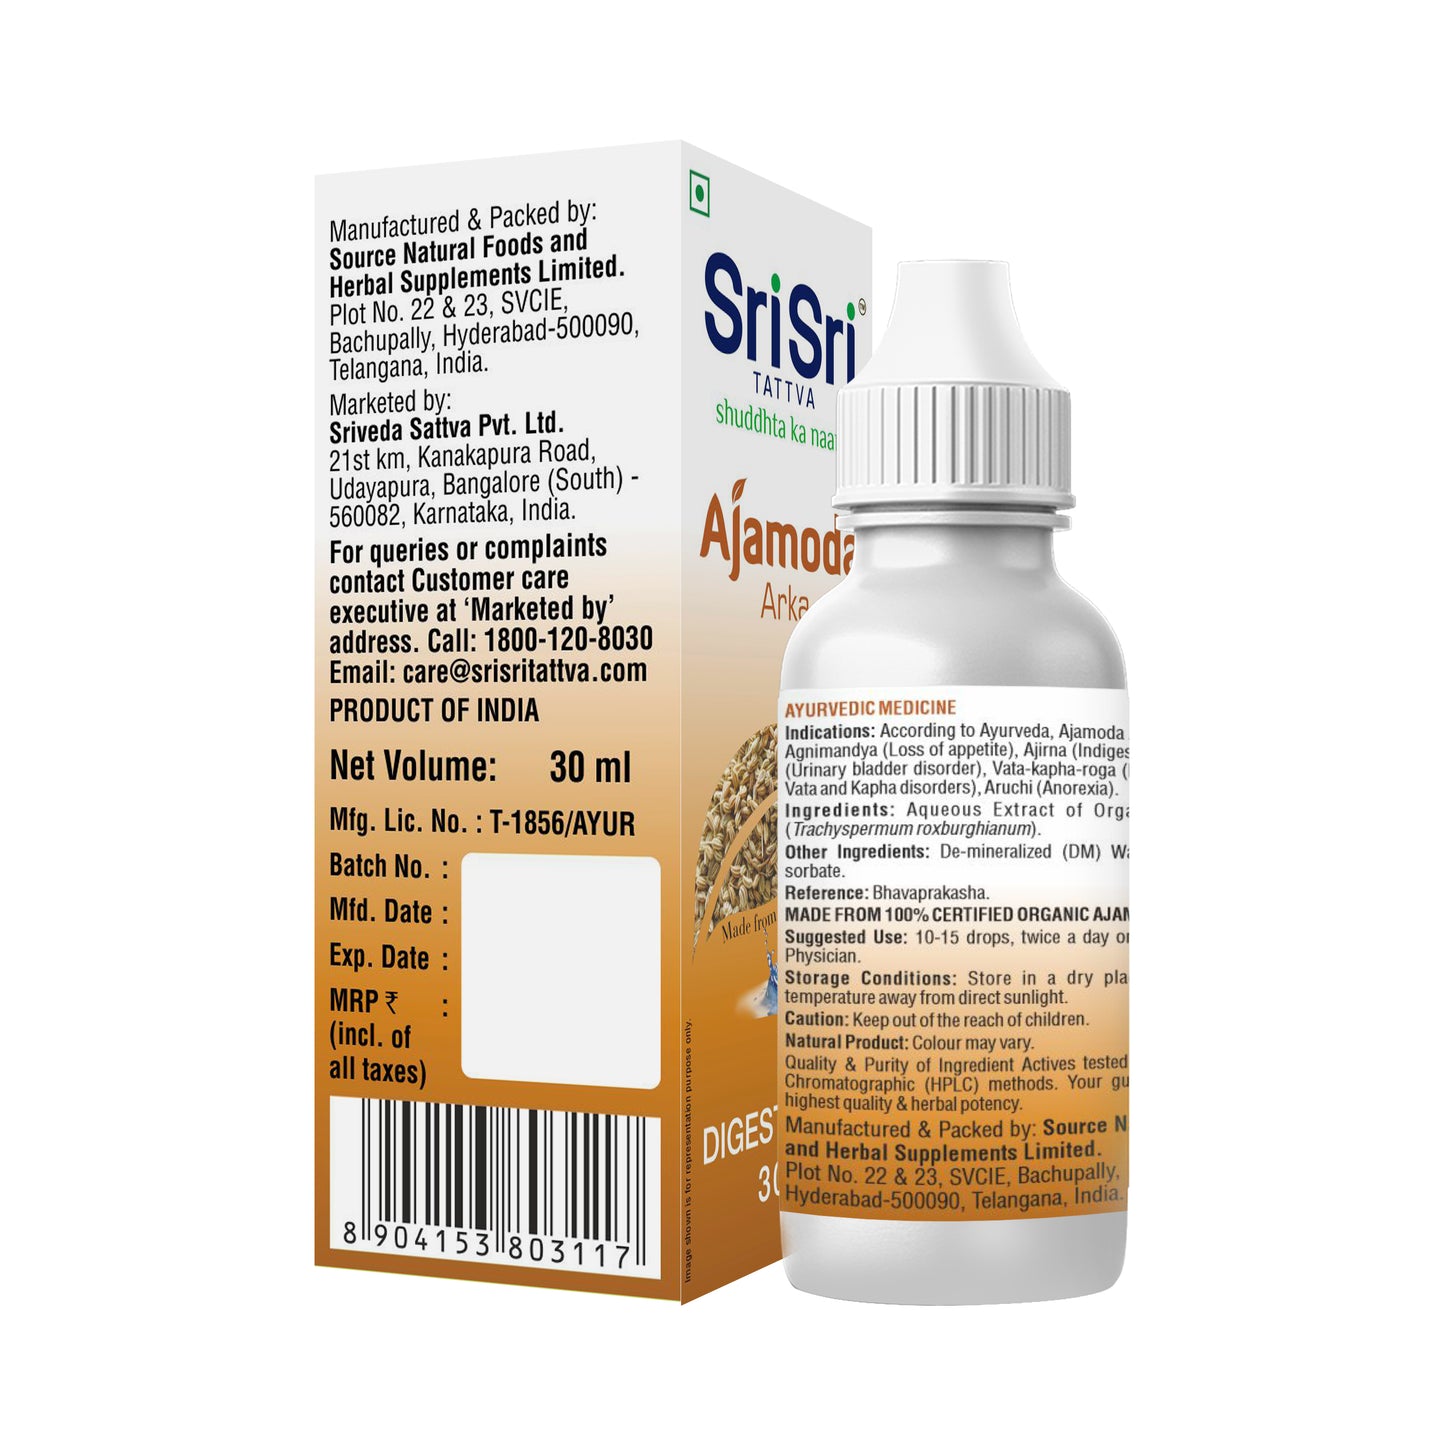 Ajamoda Arka - Digestive Aid, 30 ml